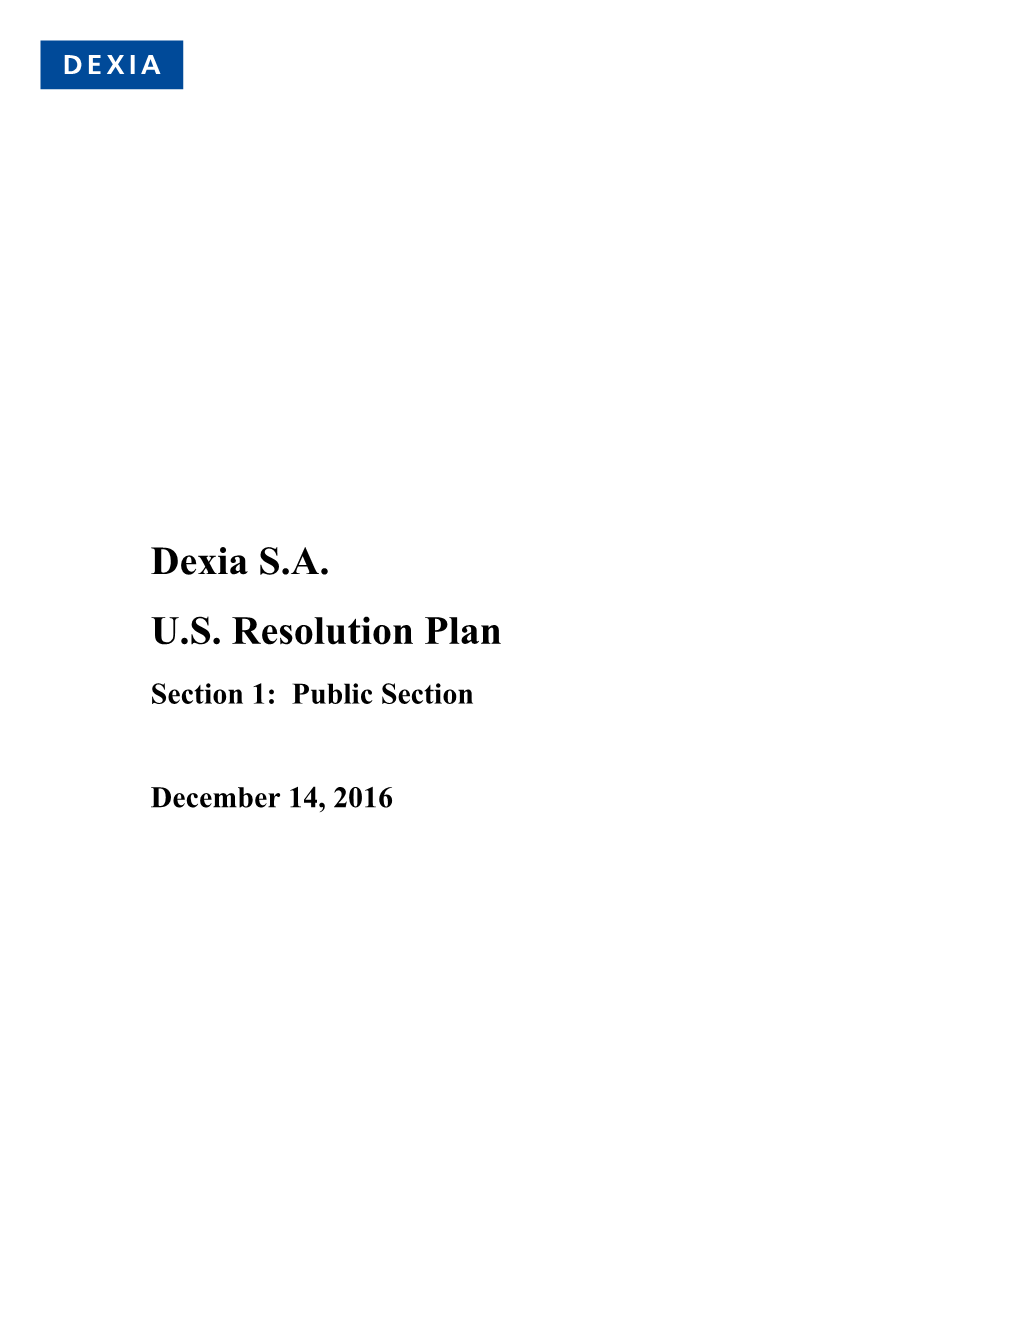 Dexia SA US Resolution Plan